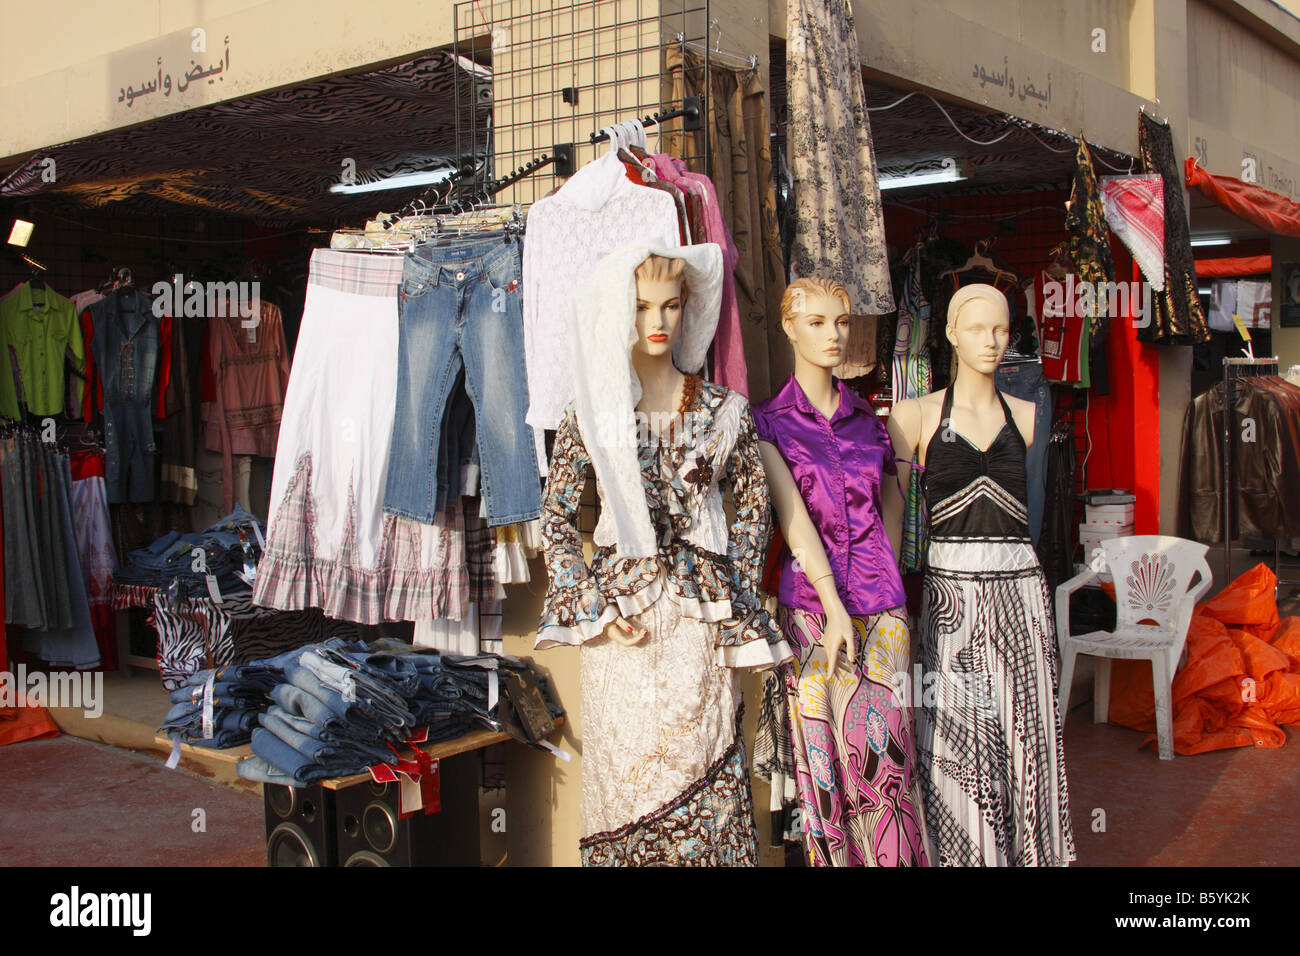  MANNEQUINS  IN A TEXTILE SHOP IN DUBAI  Stock Photo 